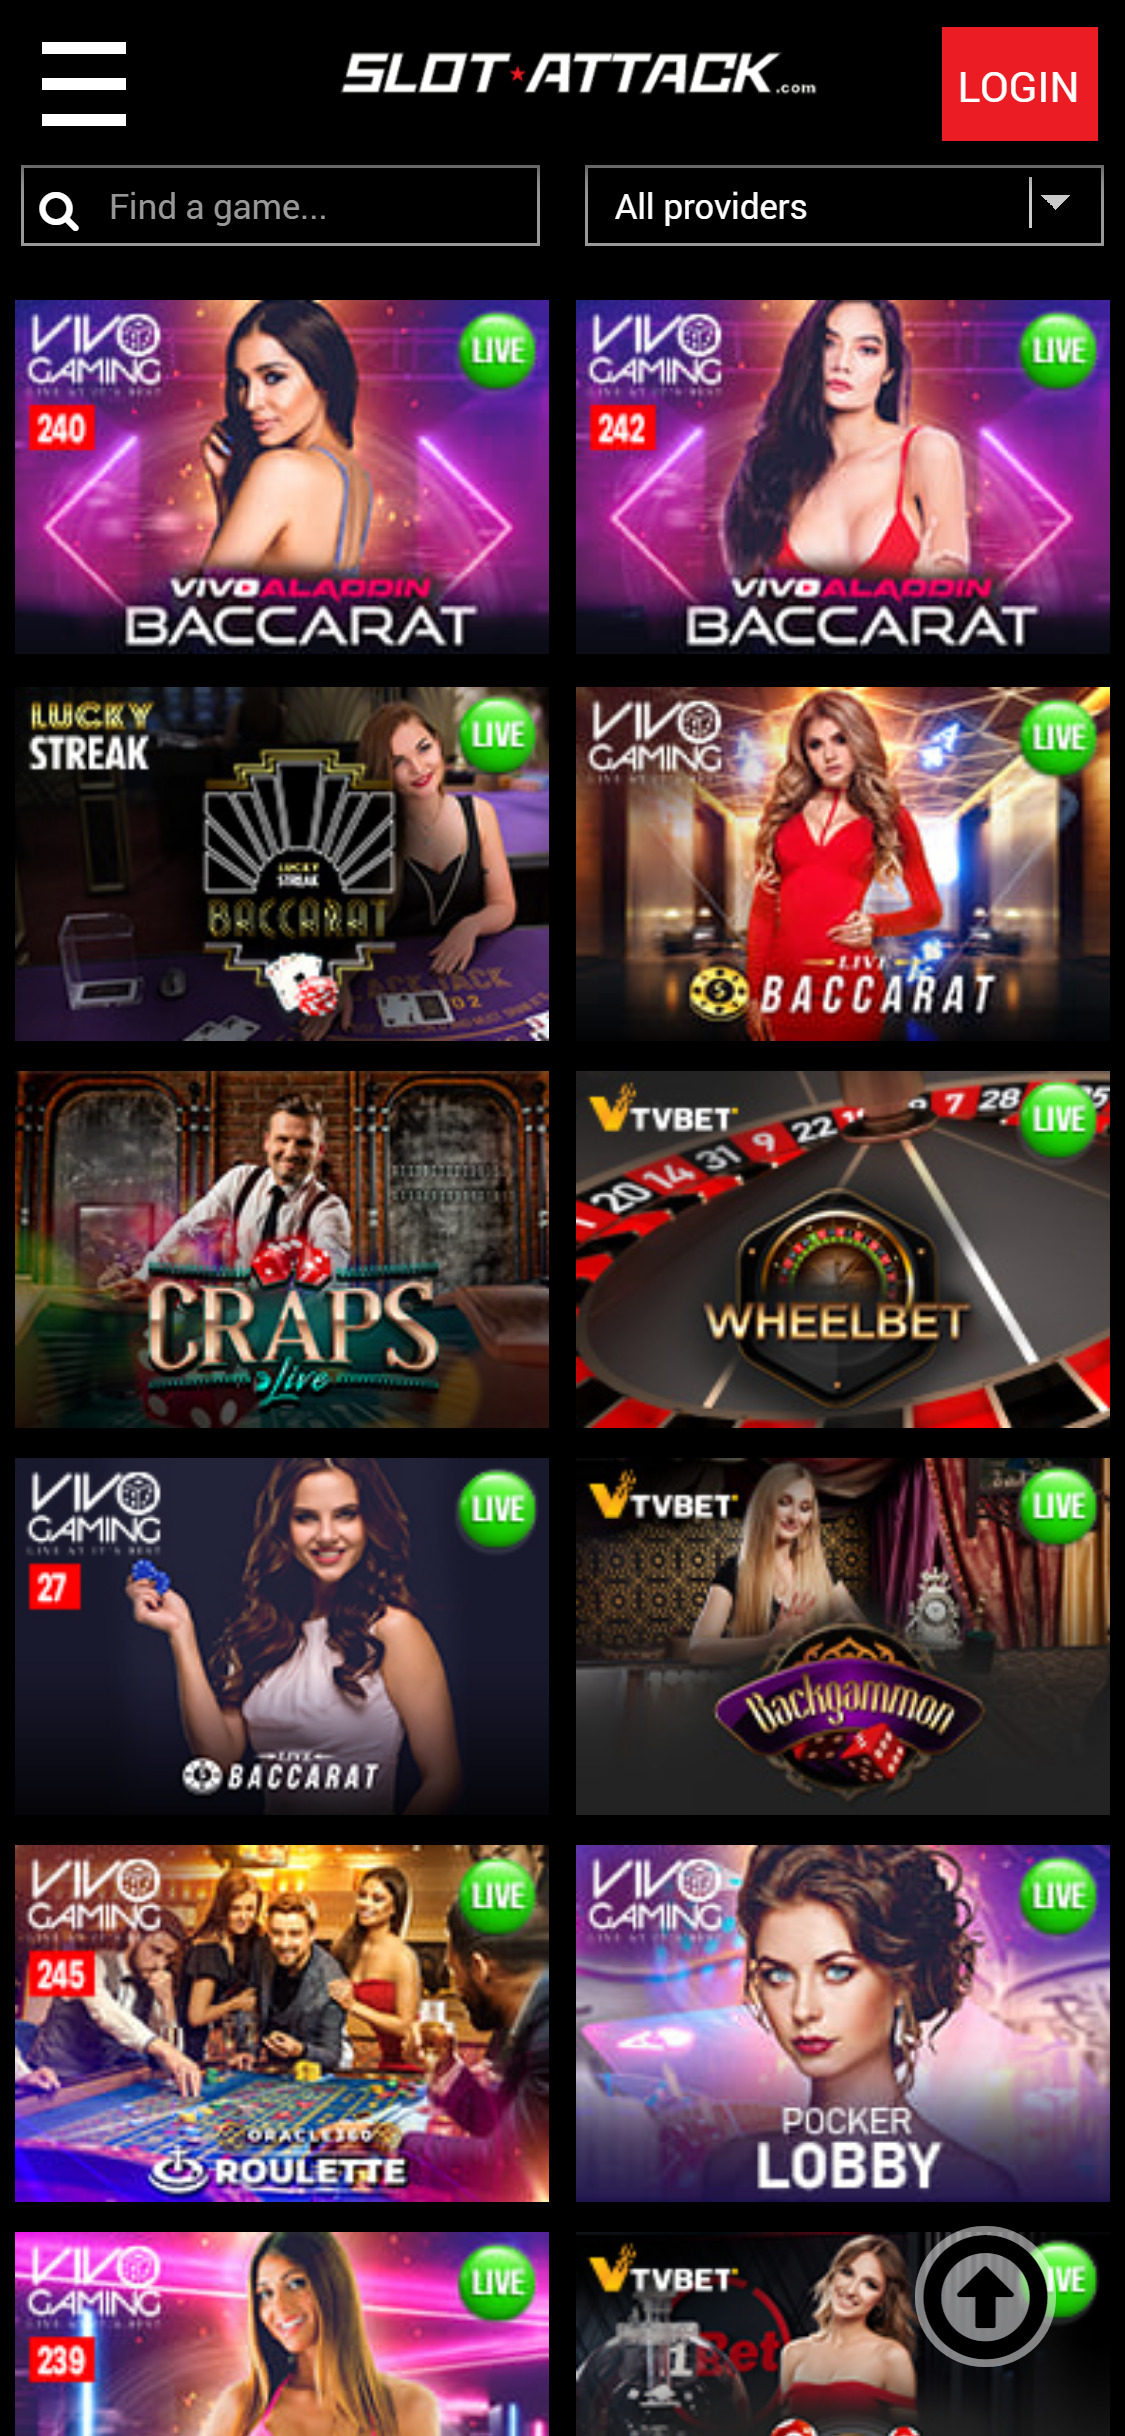 Slot Attack Casino Mobile Live Dealer Games Review